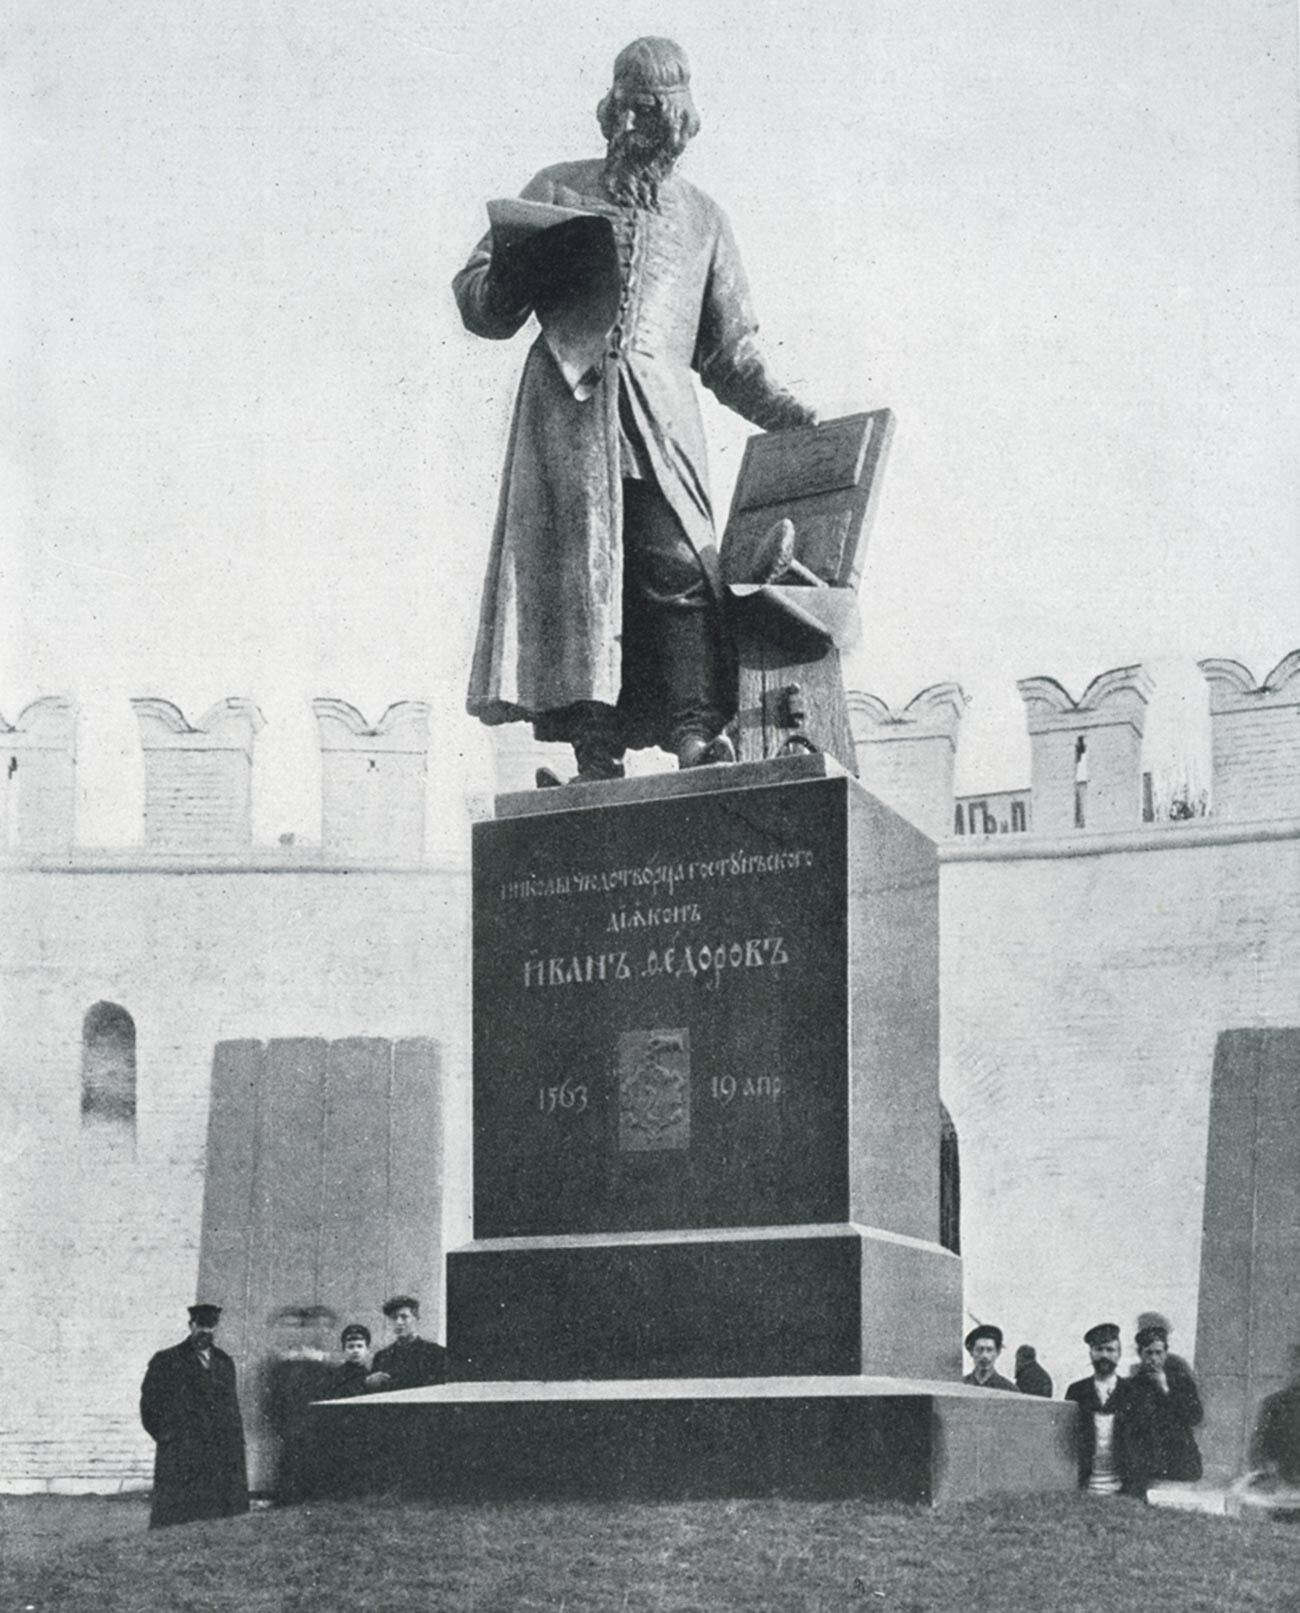 Ein Denkmal für Iwan Fjodorow in Moskau, 1910-1912